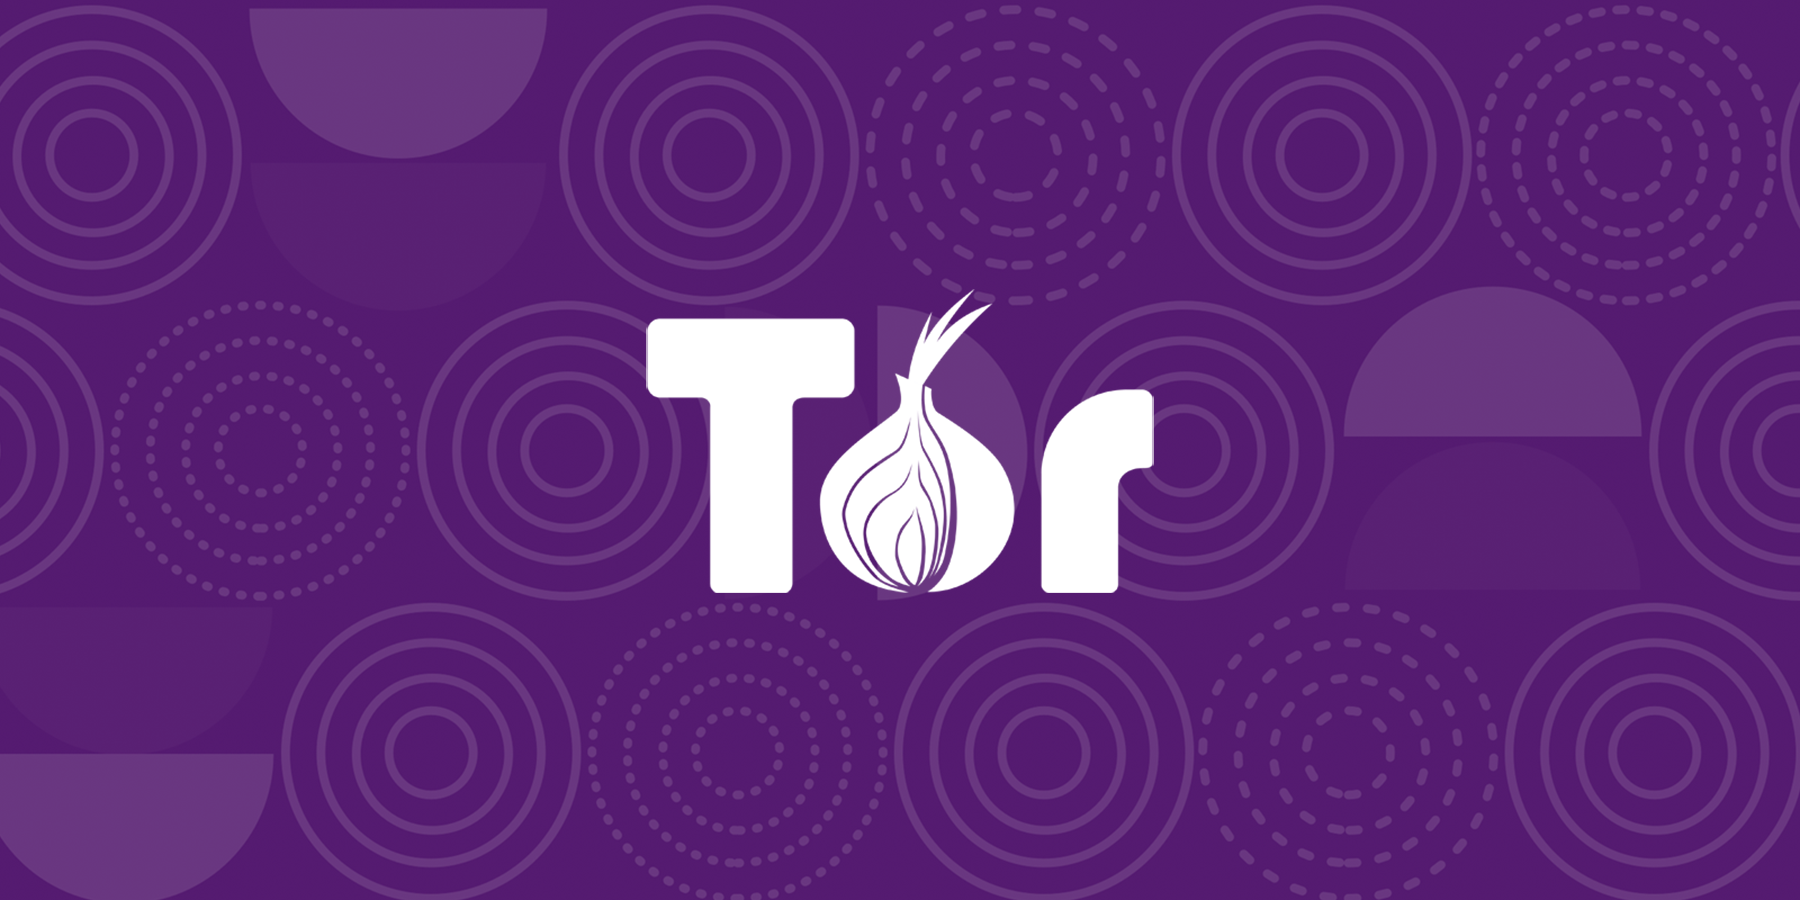 Tor-brauzer.png